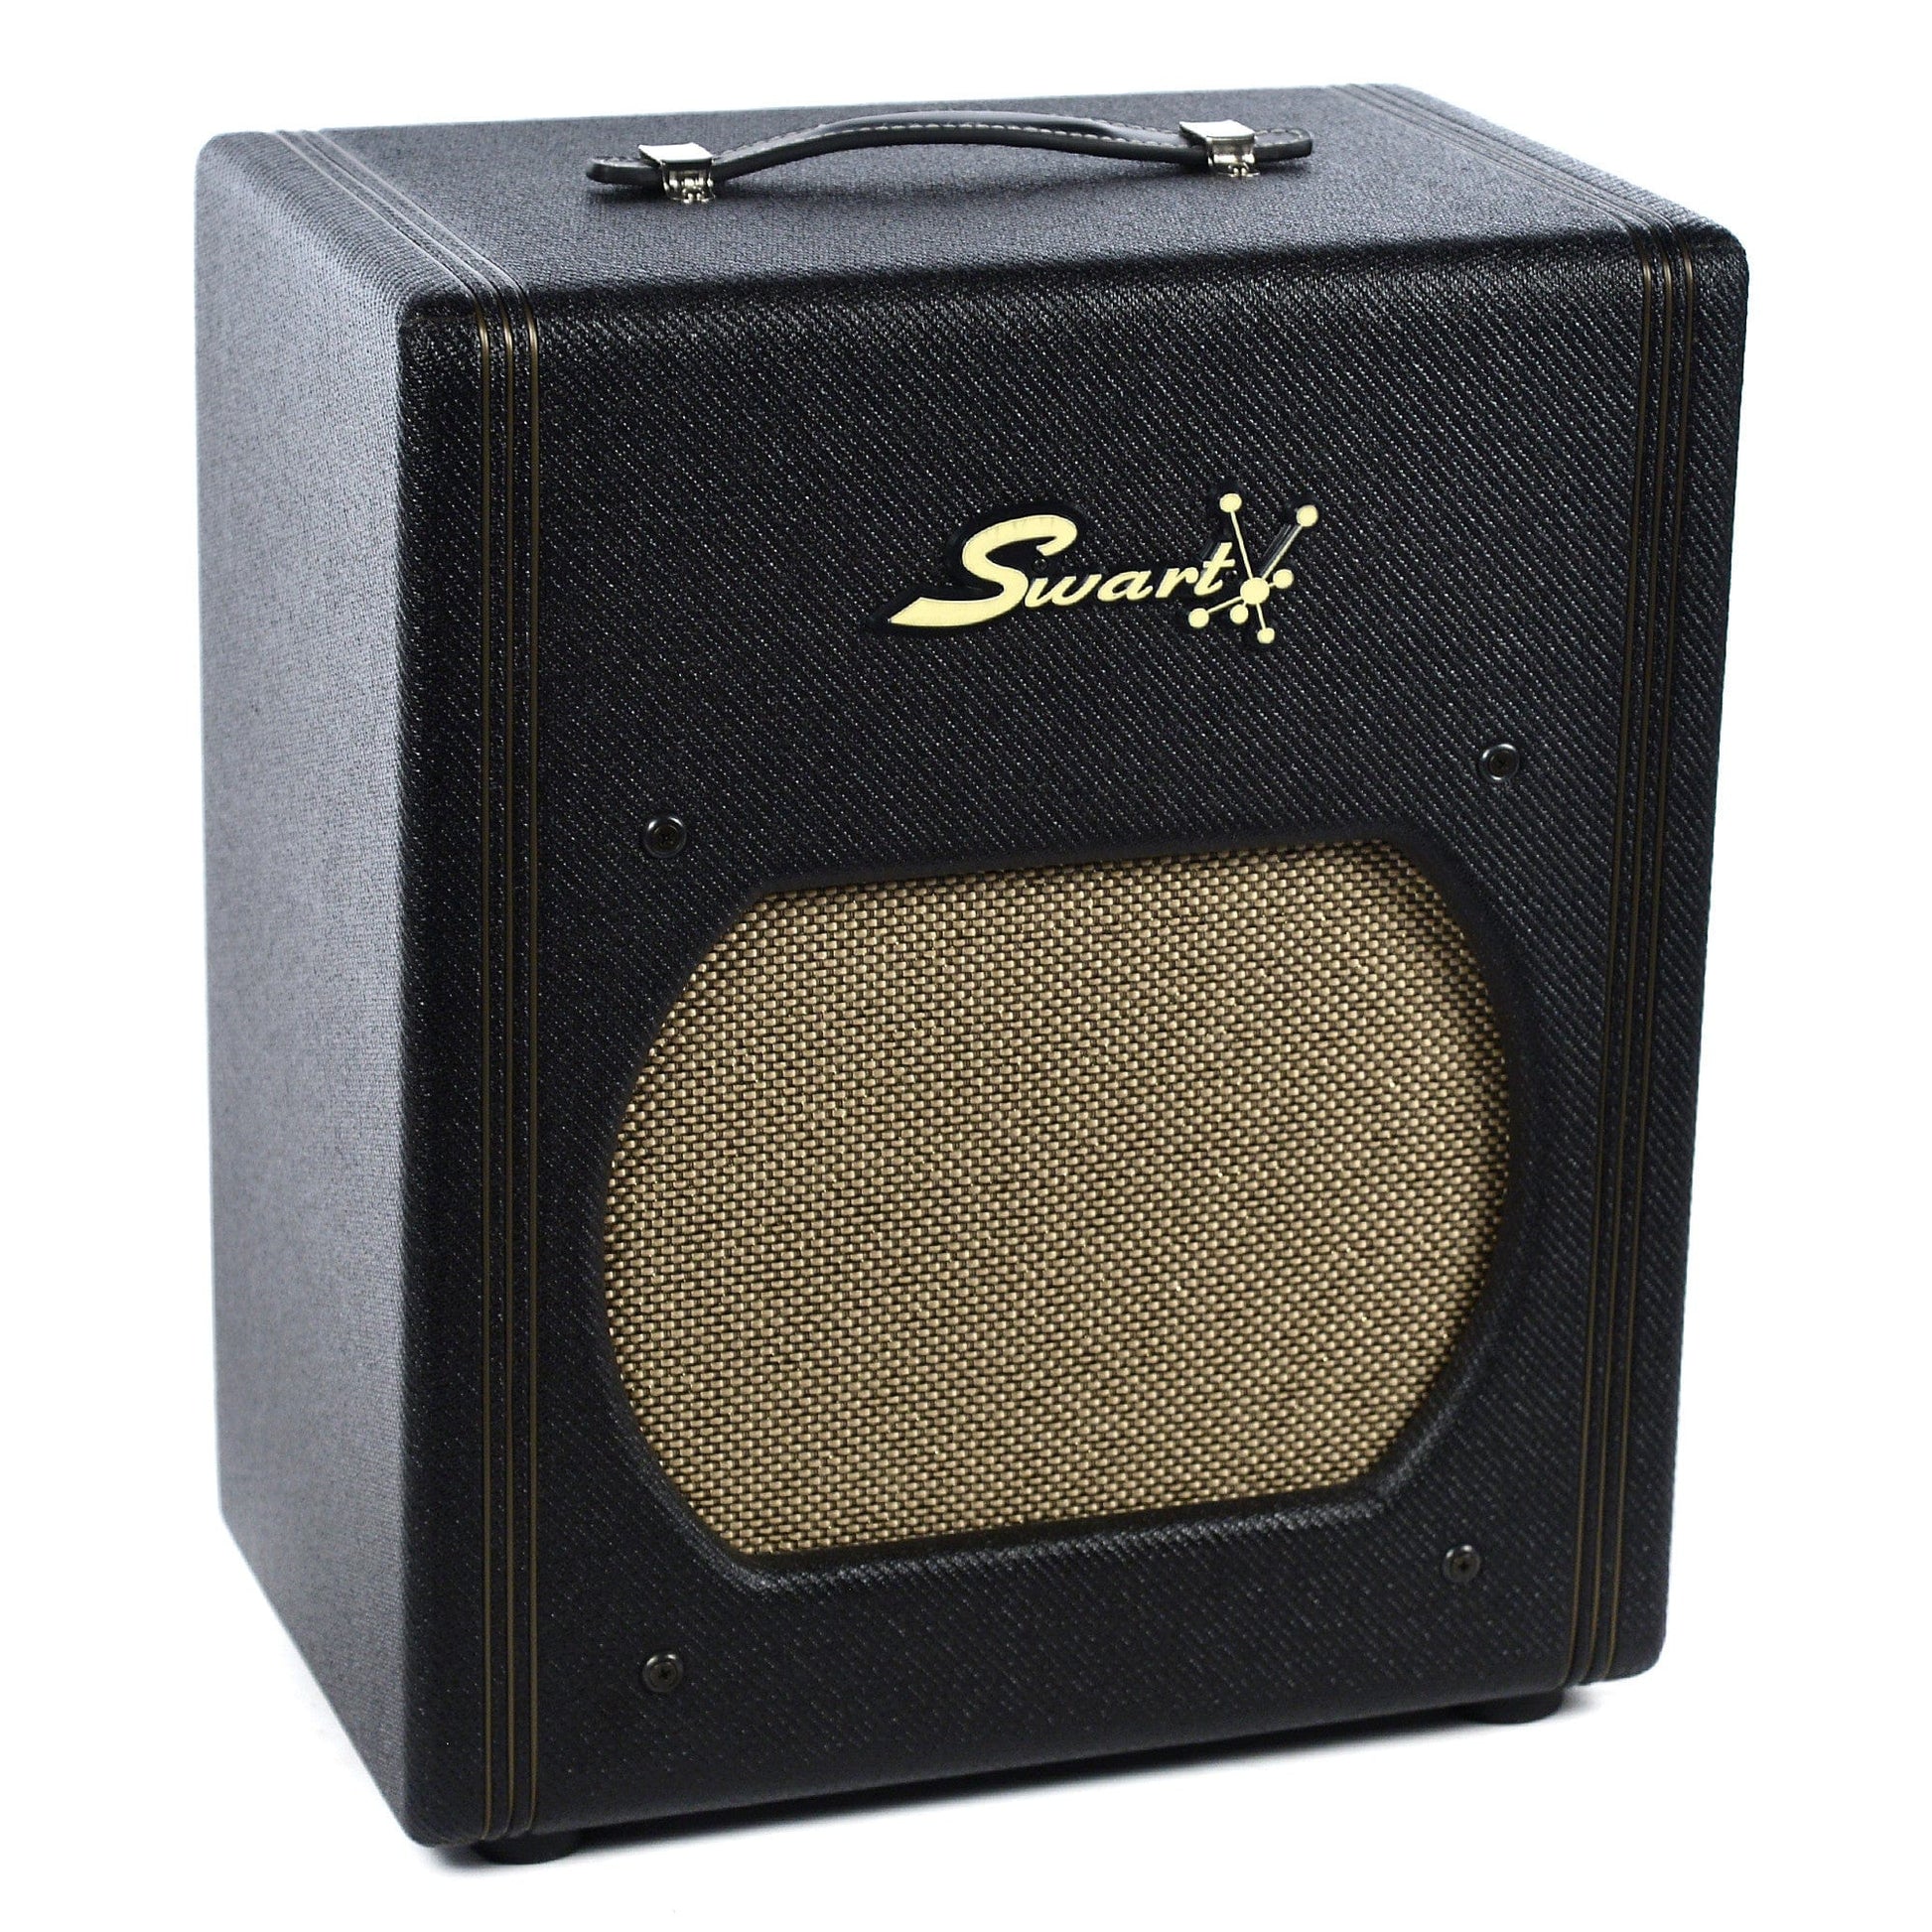 Swart AST Pro w/Celestion Greenback Speaker Amps / Guitar Combos